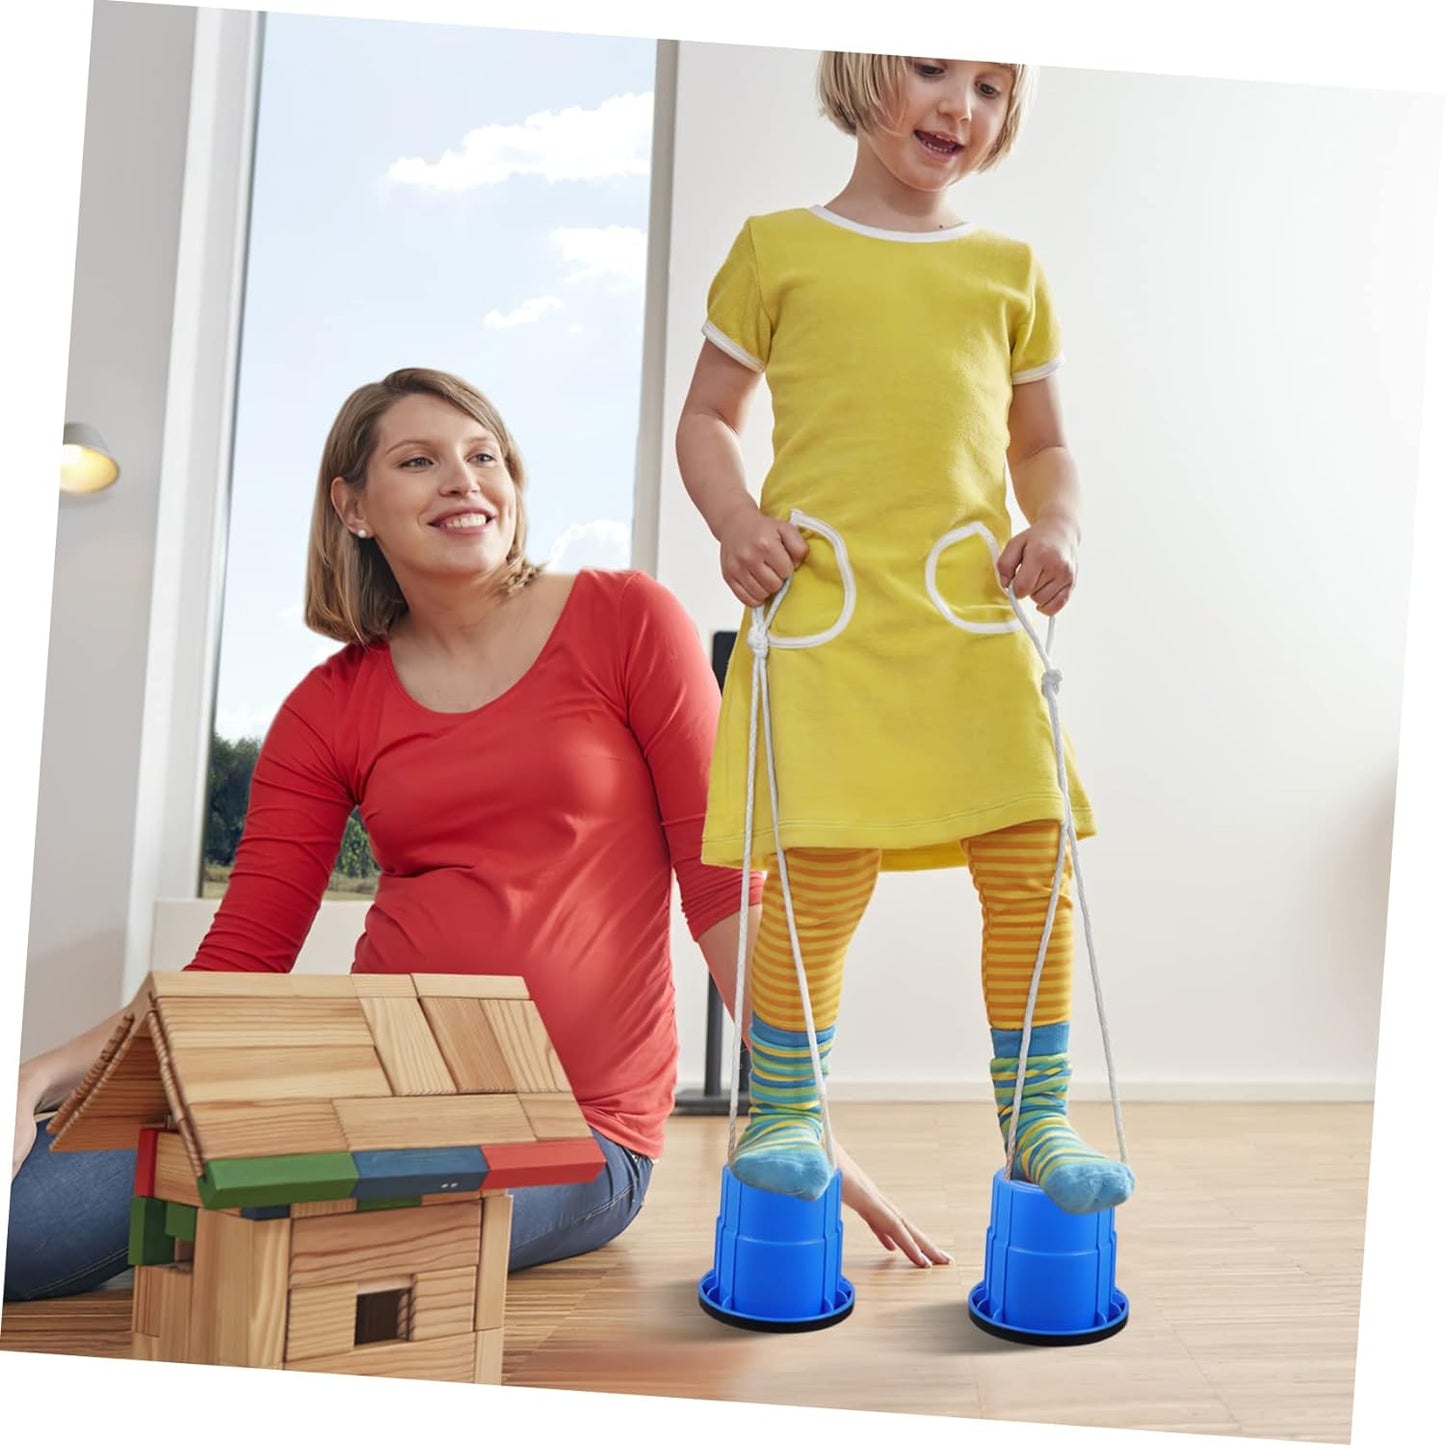 Grampus Bucket Balancing Stilts Set of 6 Pairs in 6 Colors 平衡高蹺6色6對套裝